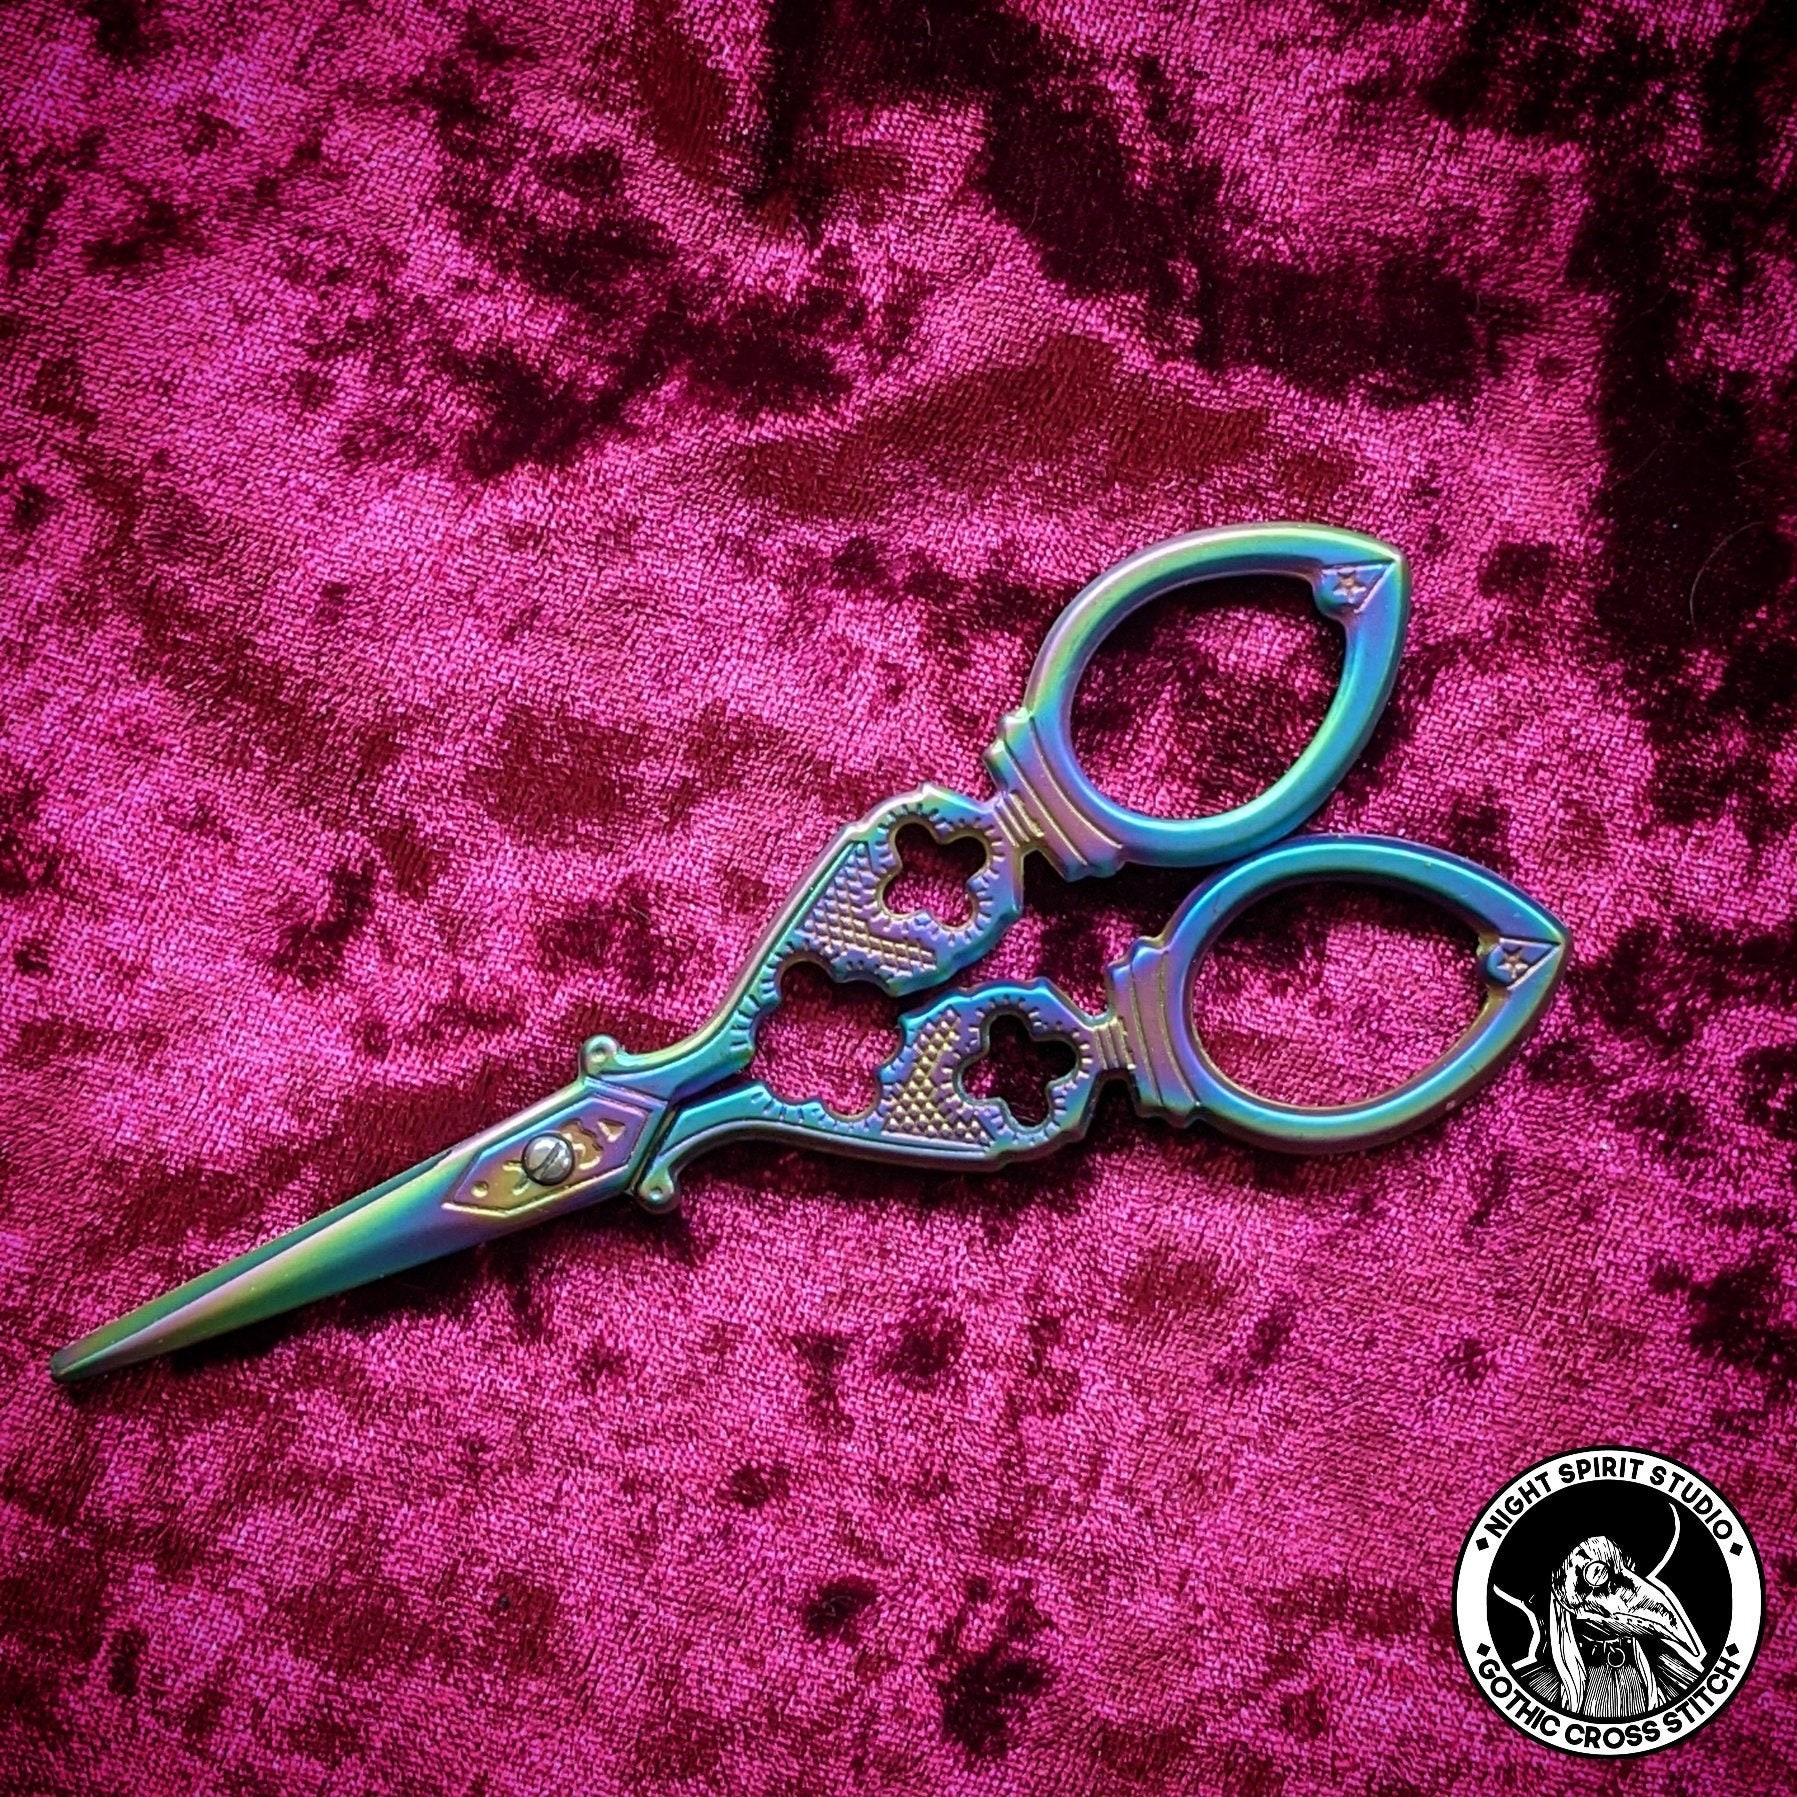 Rainbow Embroidery Scissors, Iridescent Sewing Scissors, Yarn